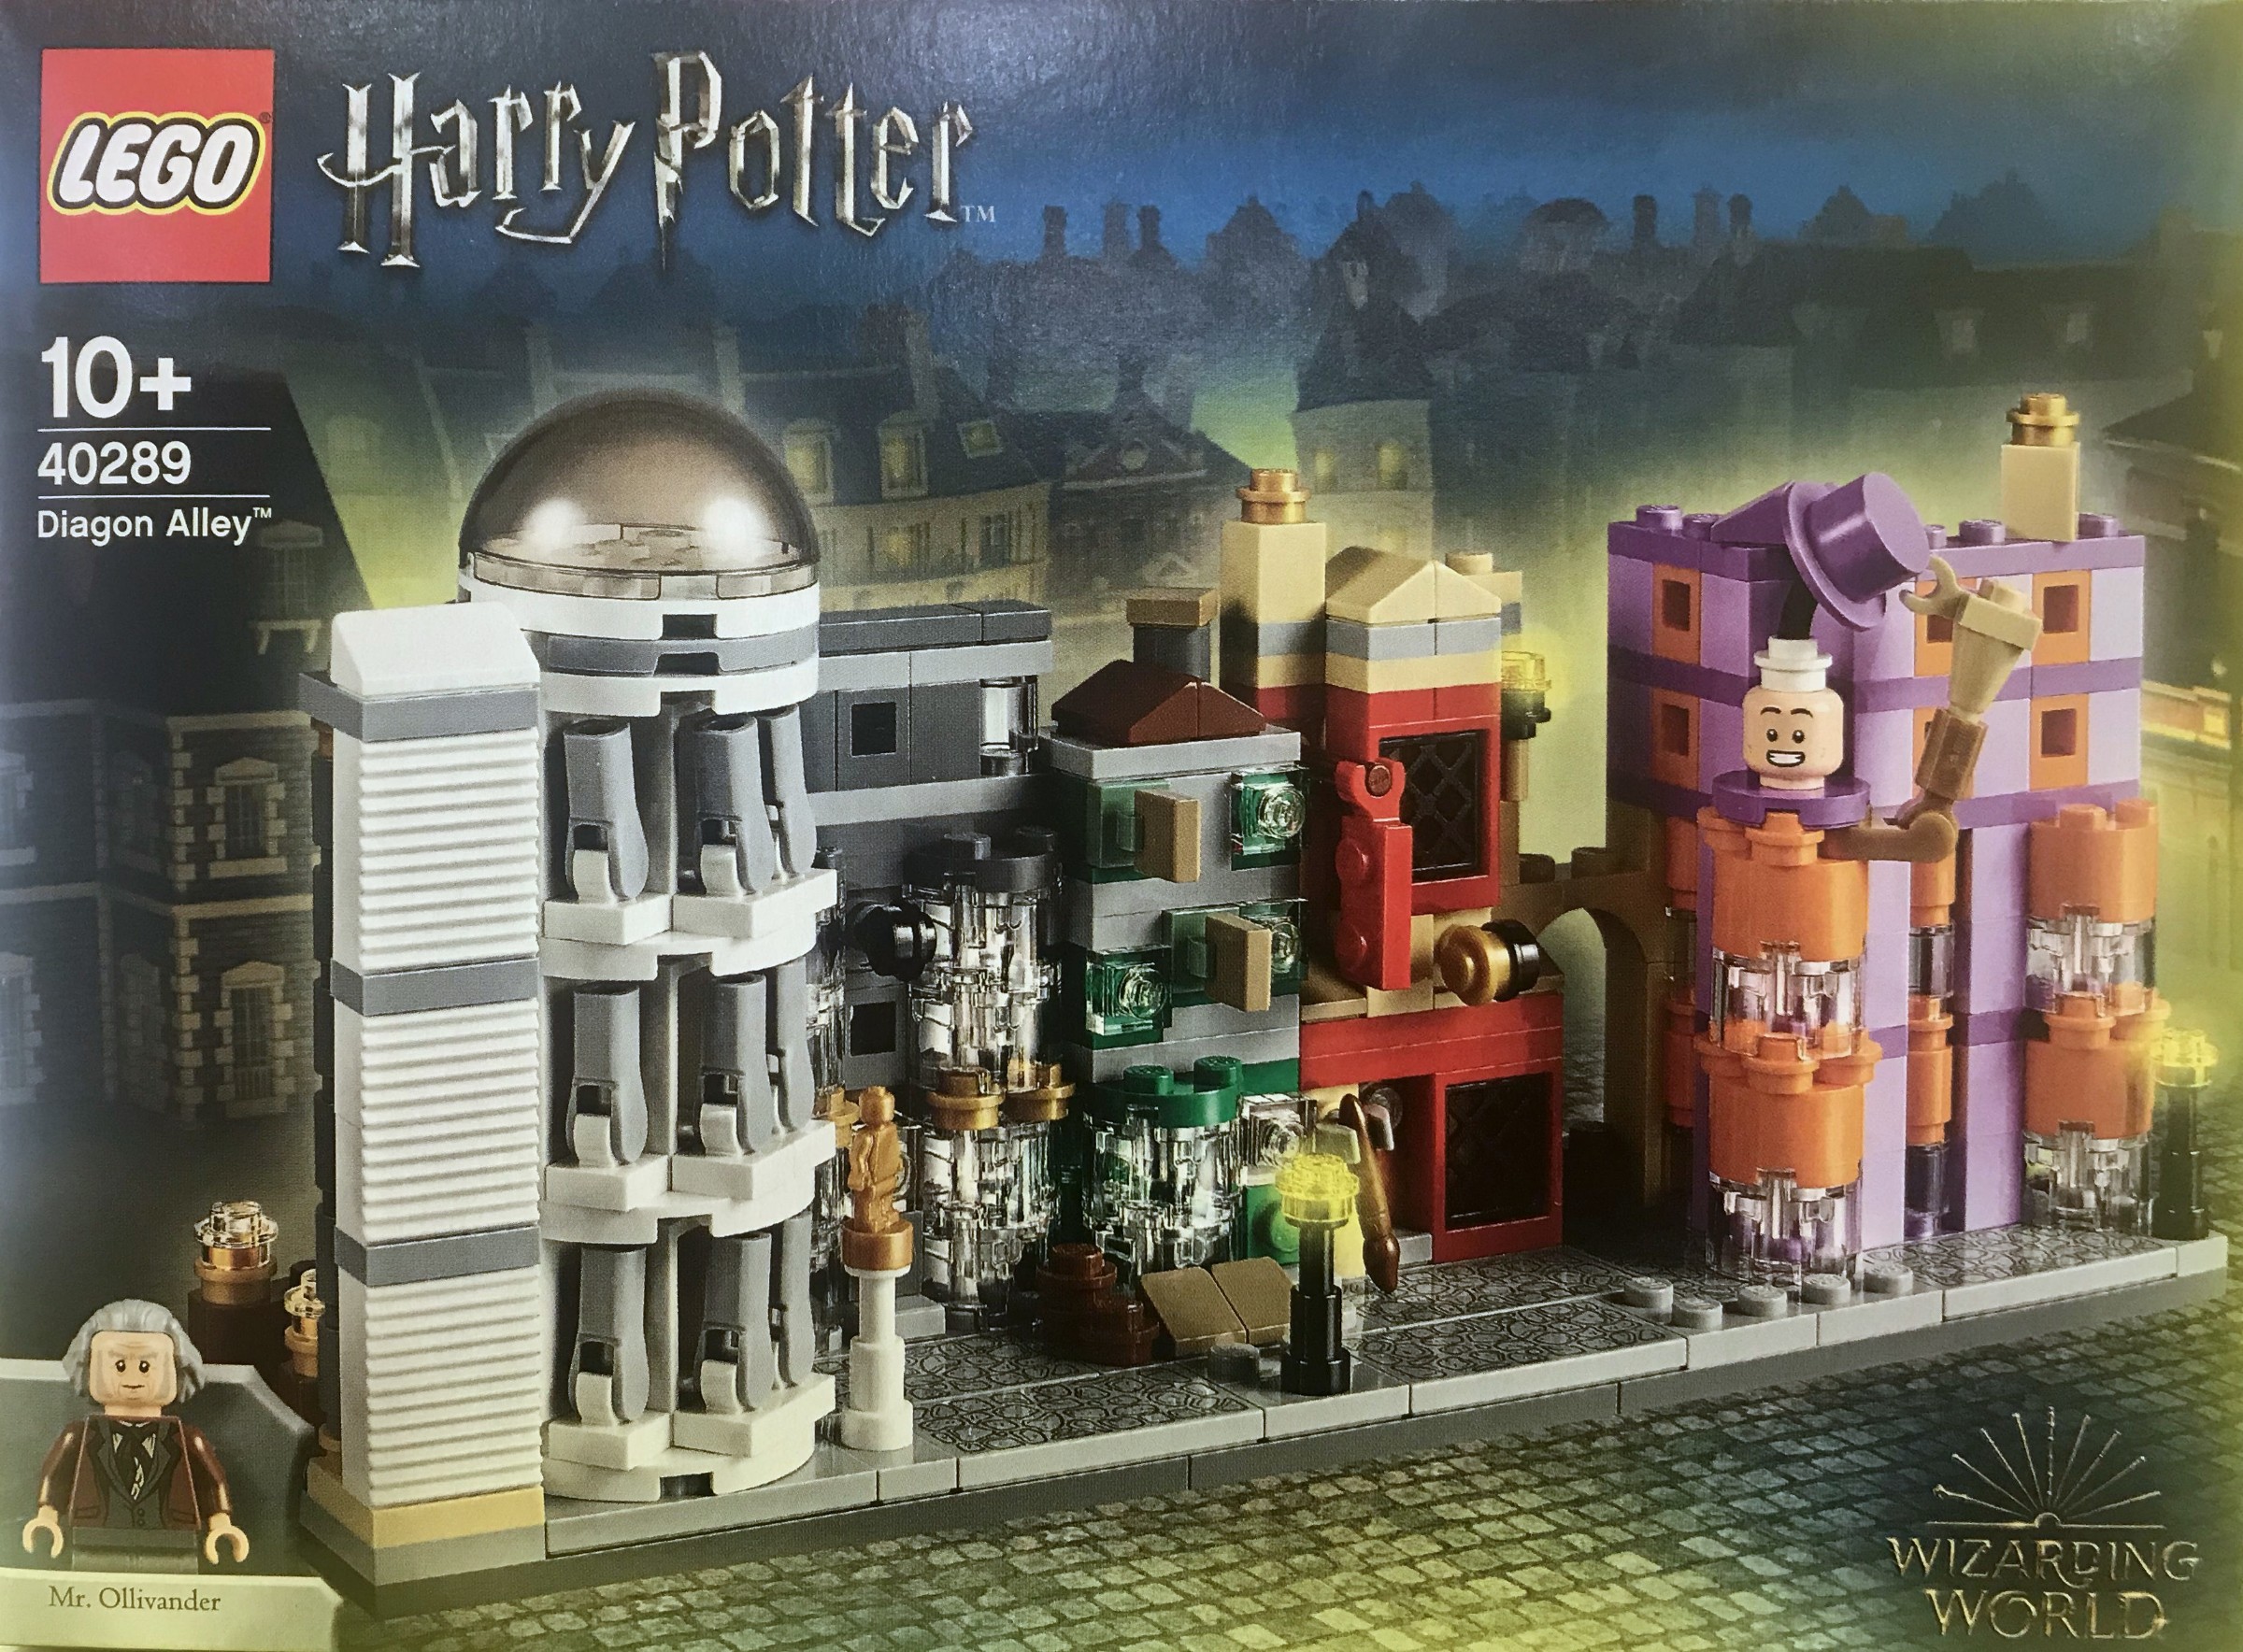 Microscale LEGO set of Diagon Alley